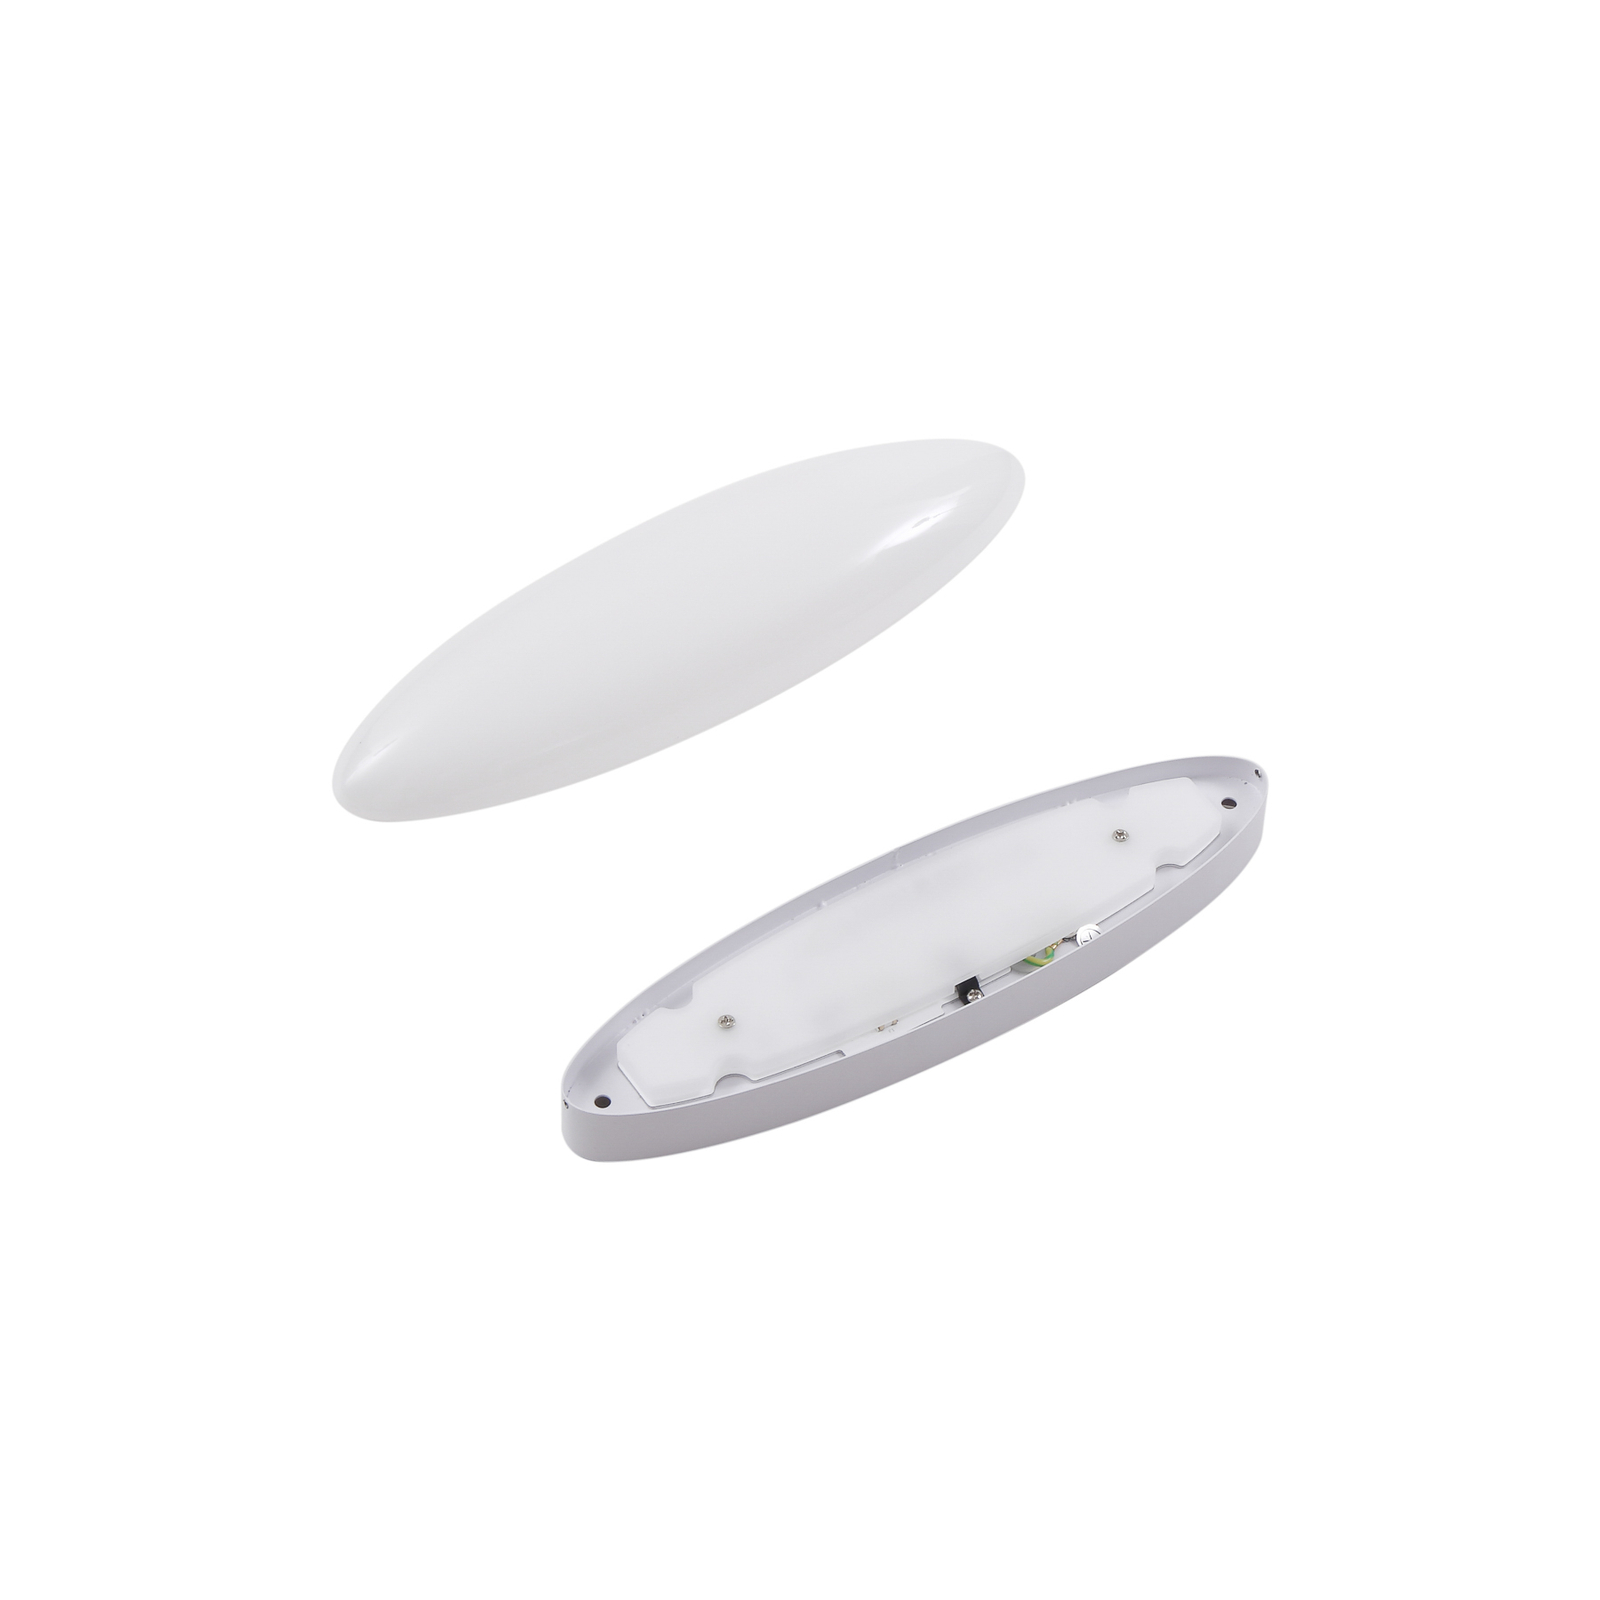 Lucande LED-Wandleuchte Leihlo, weiß, Kunststoff, 8 cm hoch